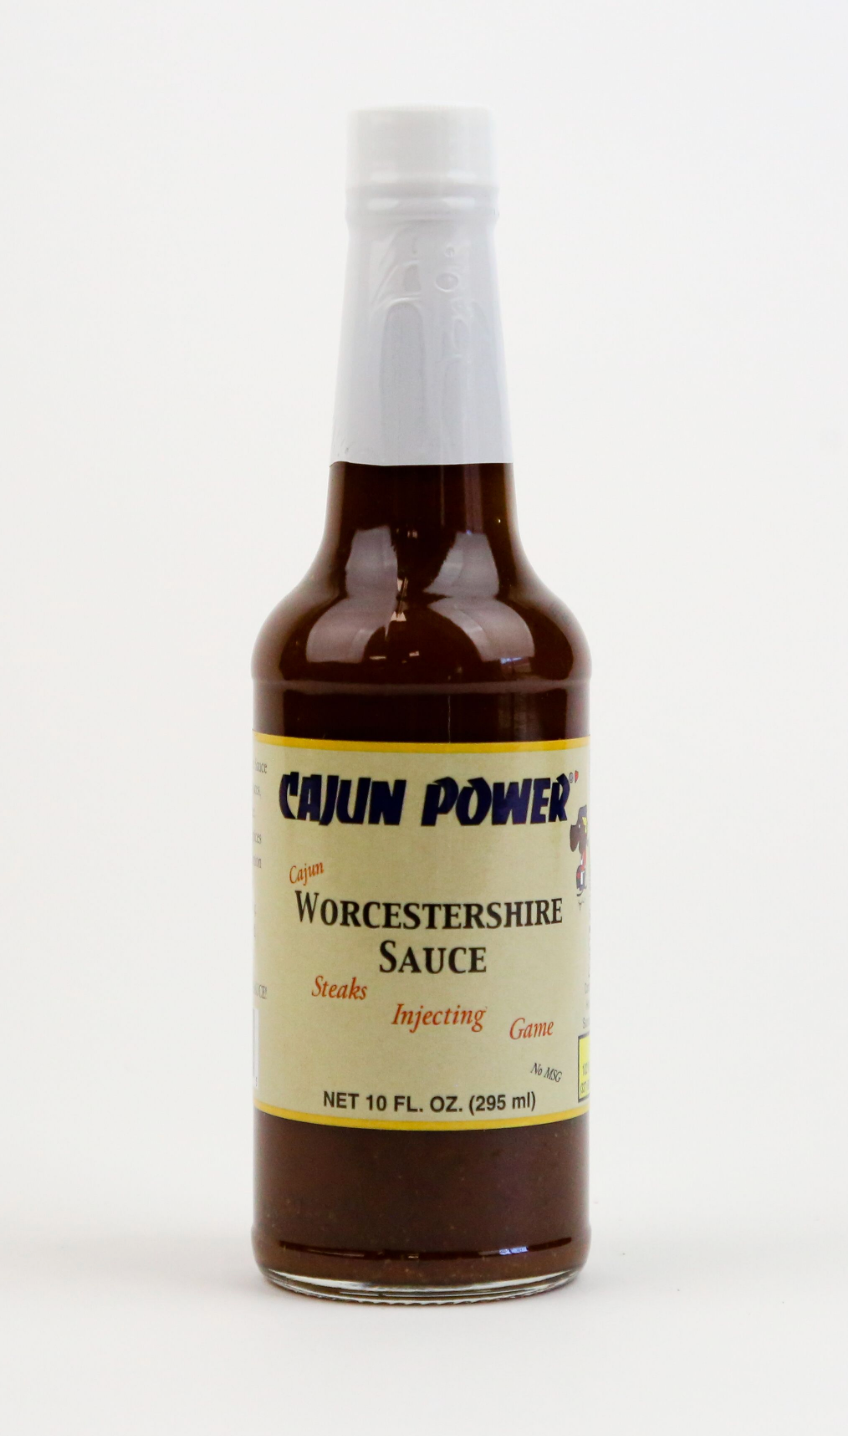 Cajun Power Worcestershire Sauce - New Orleans School of Cooking